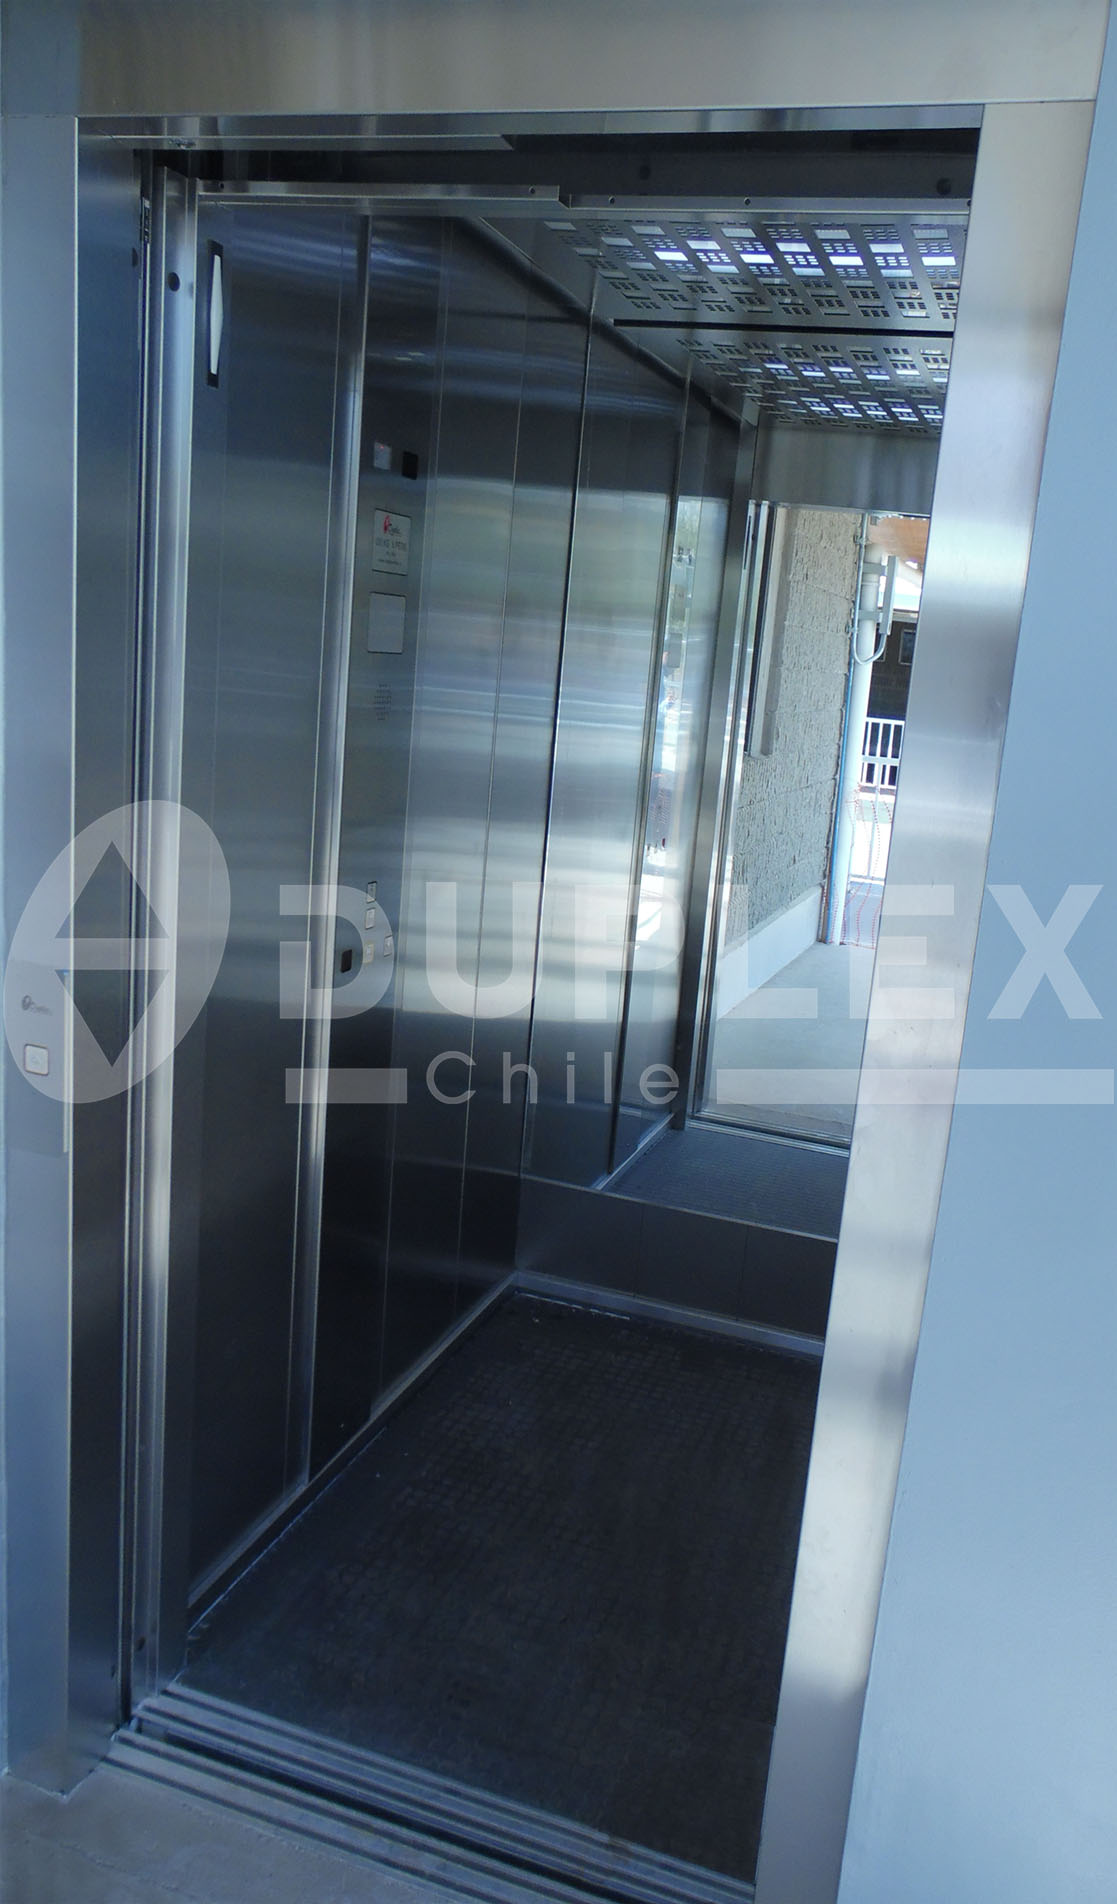 ascensor-hidraulico-duplex-8